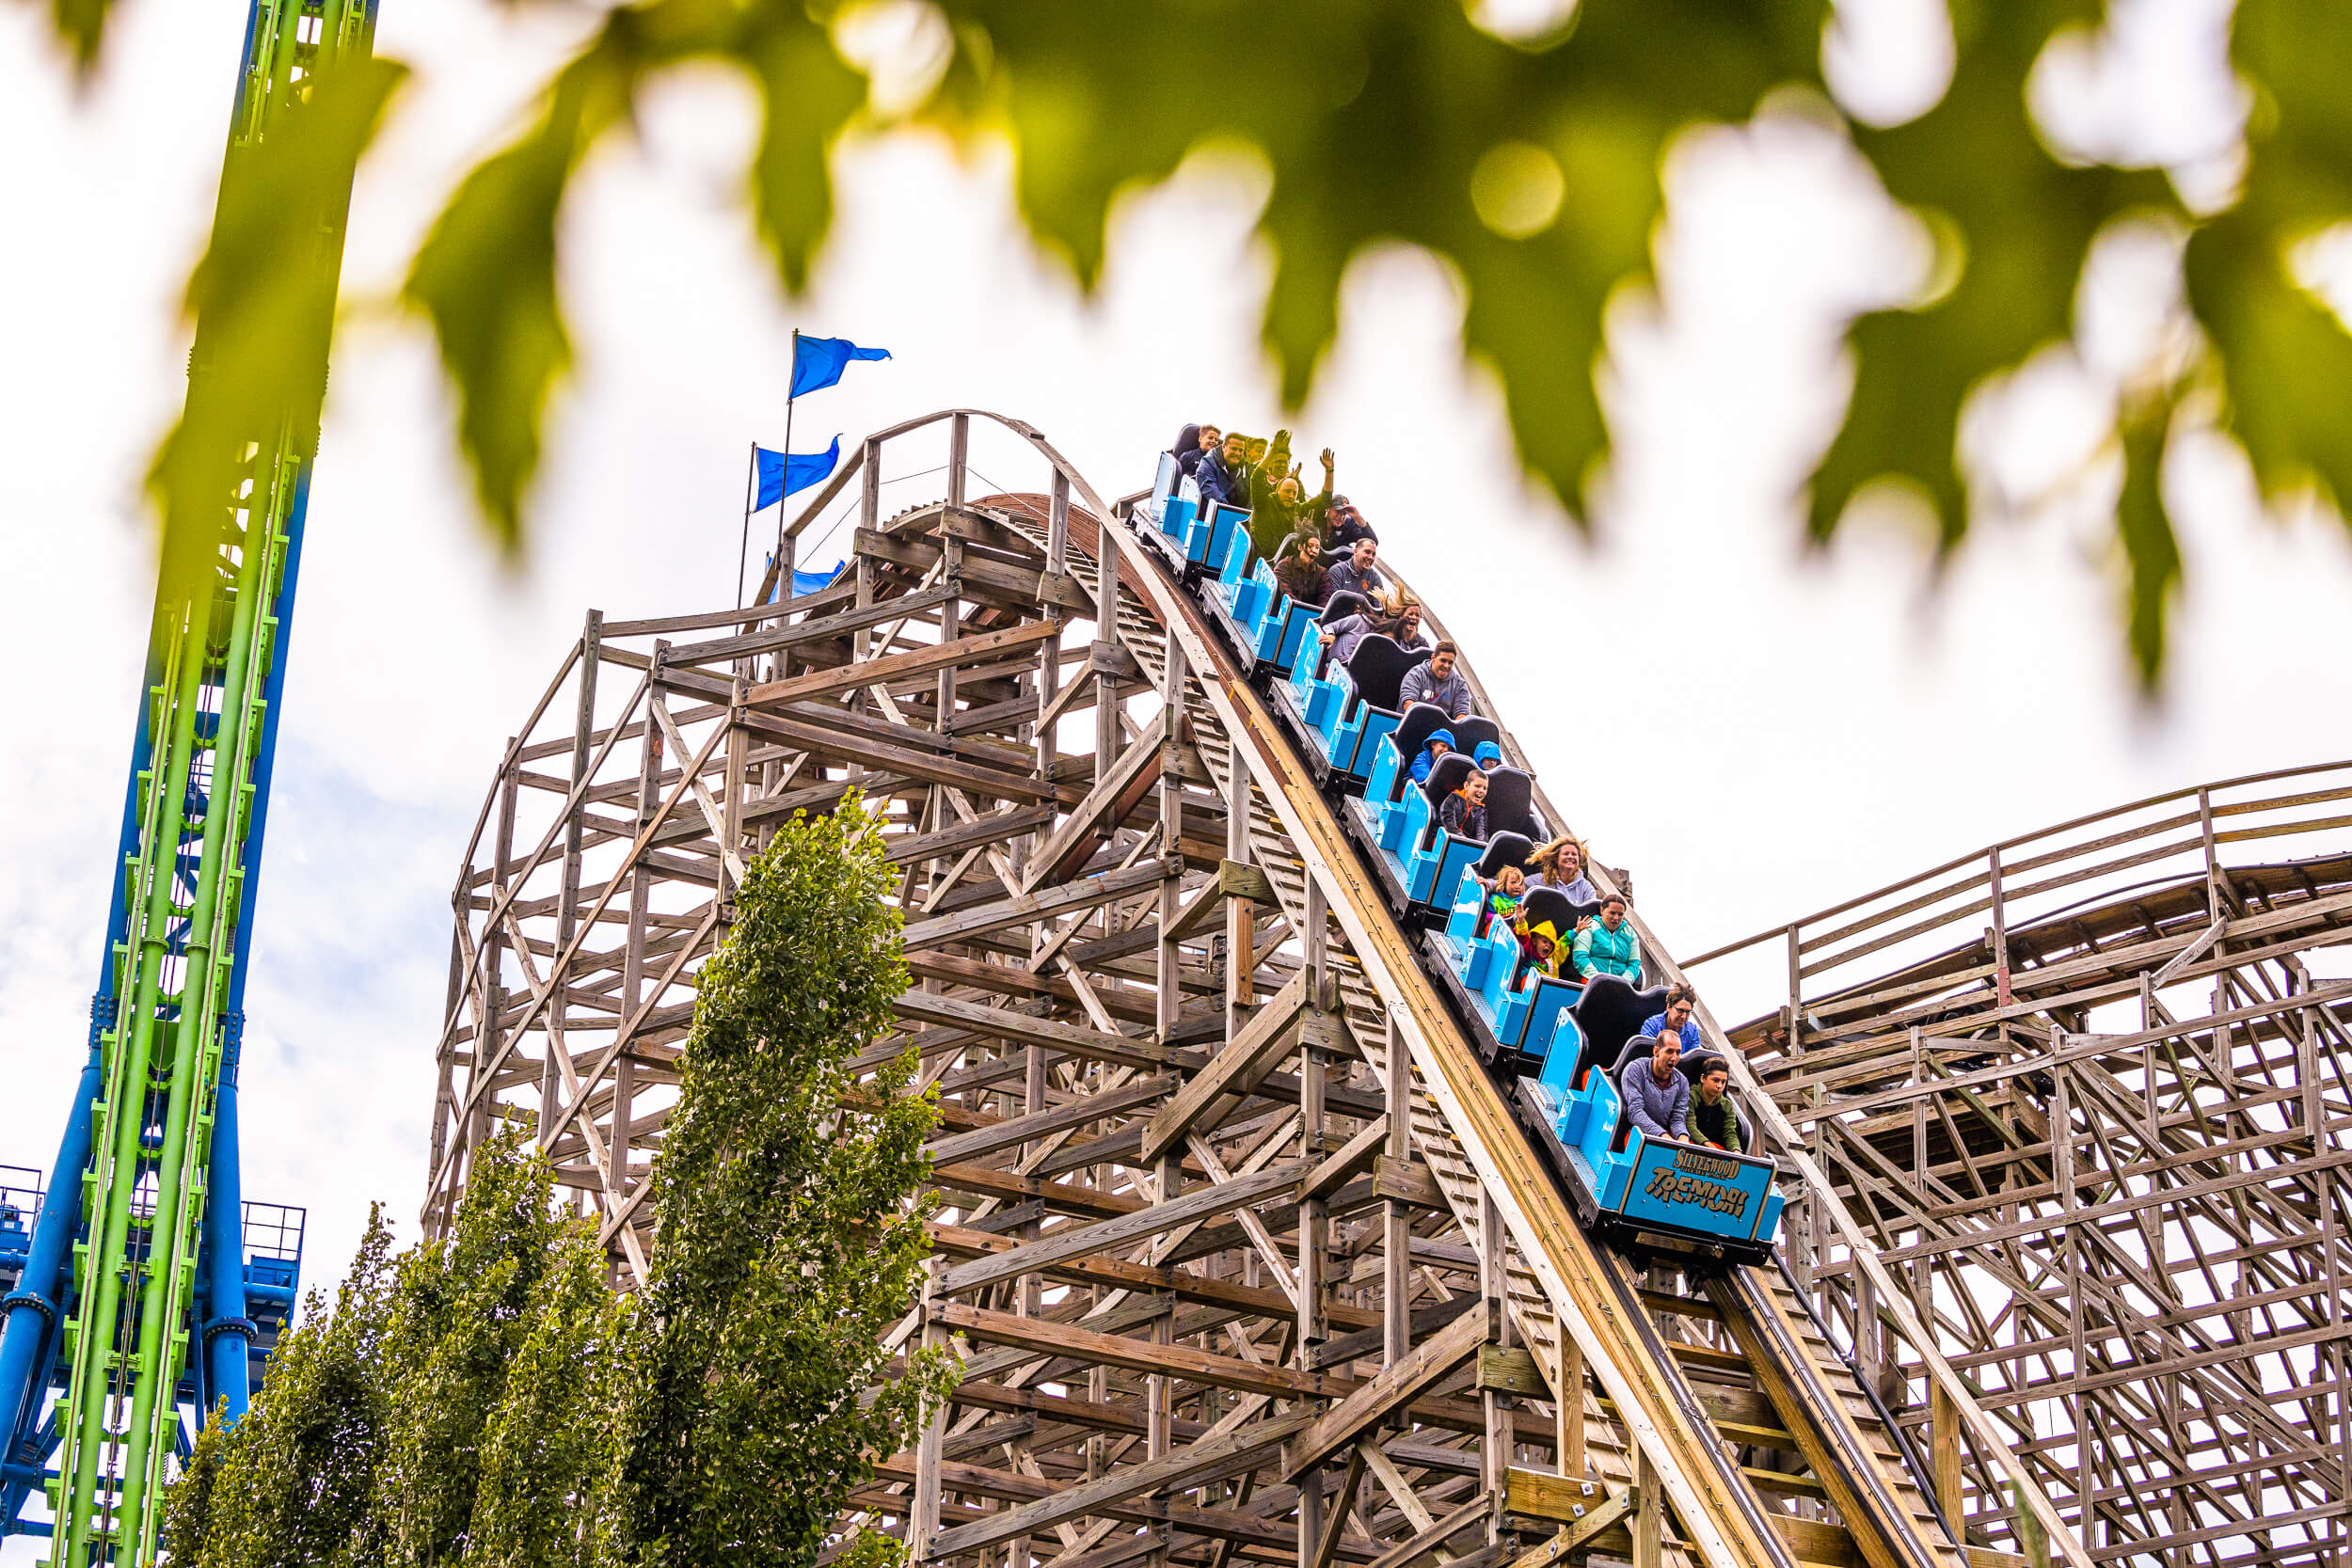 Idaho amusement park visitors ride the Tremors roller coaster at Silverwood Theme Park.